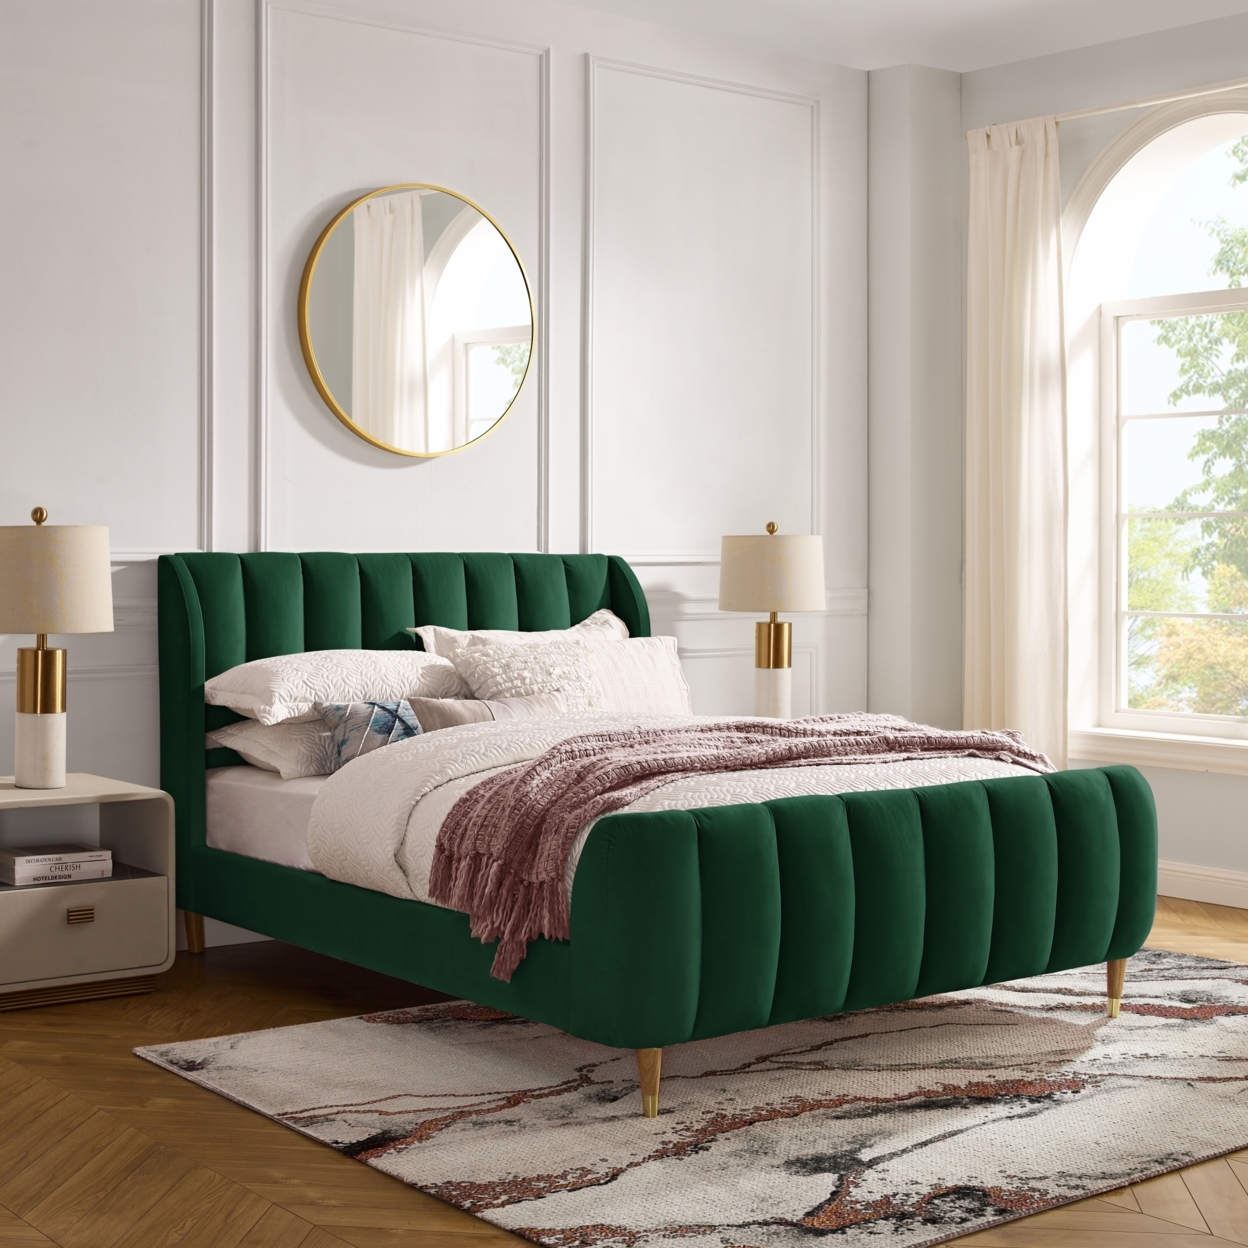 Sana Bed-Upholstered-Channel Tufted-Slats Included - Hunter Green, King